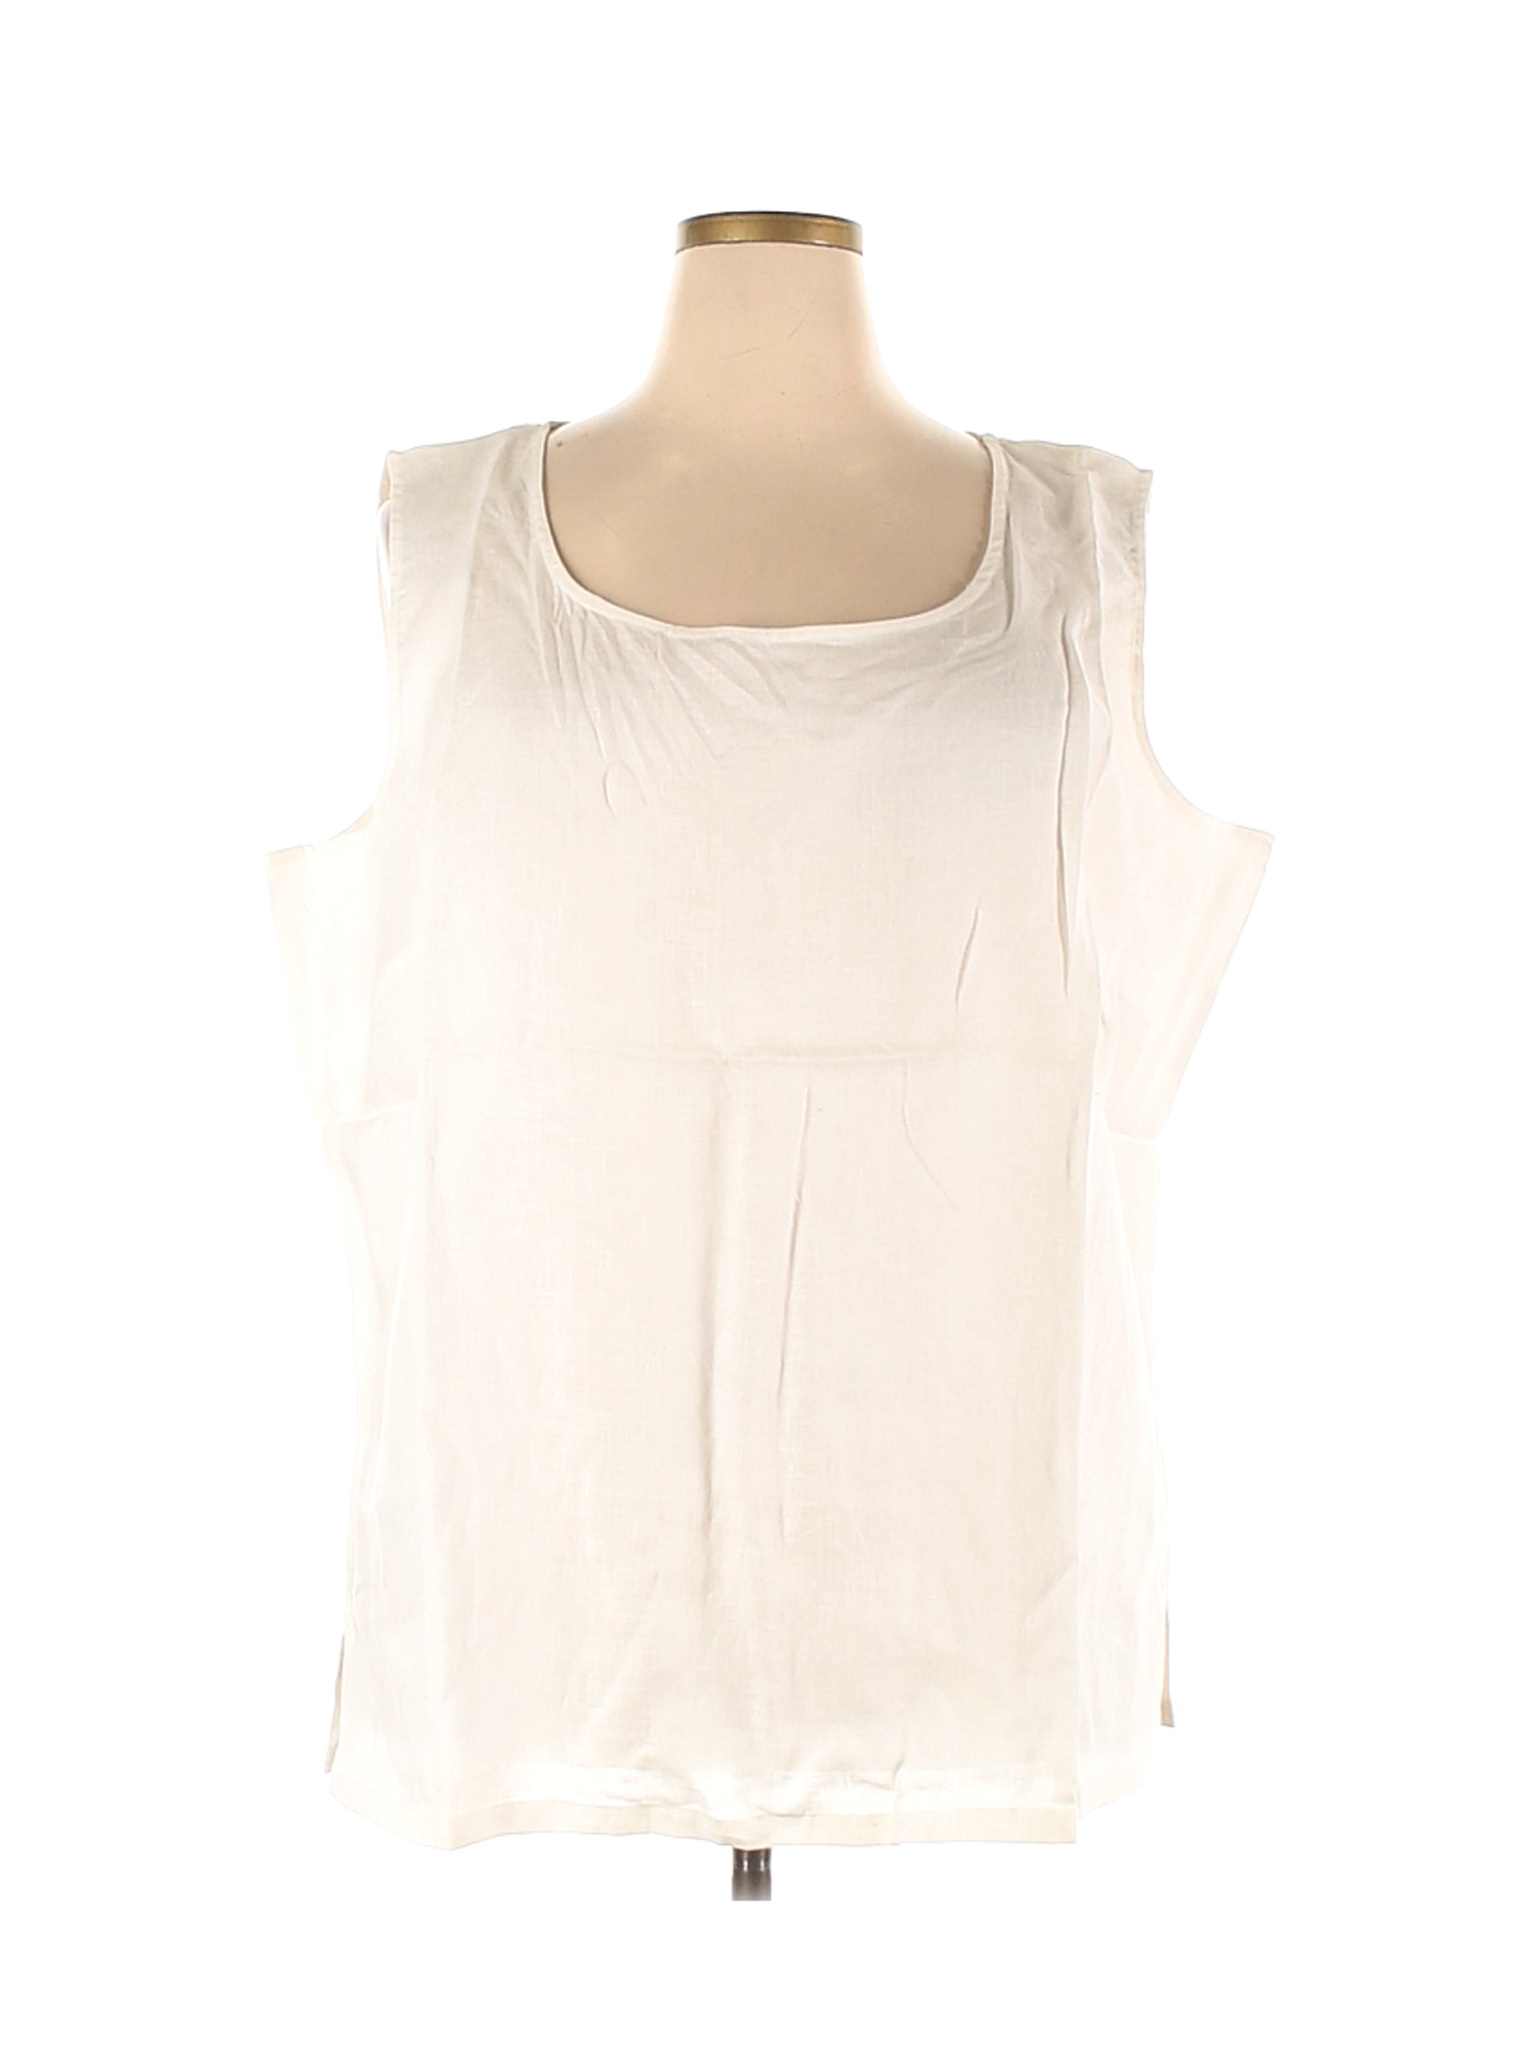 NWT Gillian Grey Women Ivory Sleeveless Blouse 3X Plus | eBay